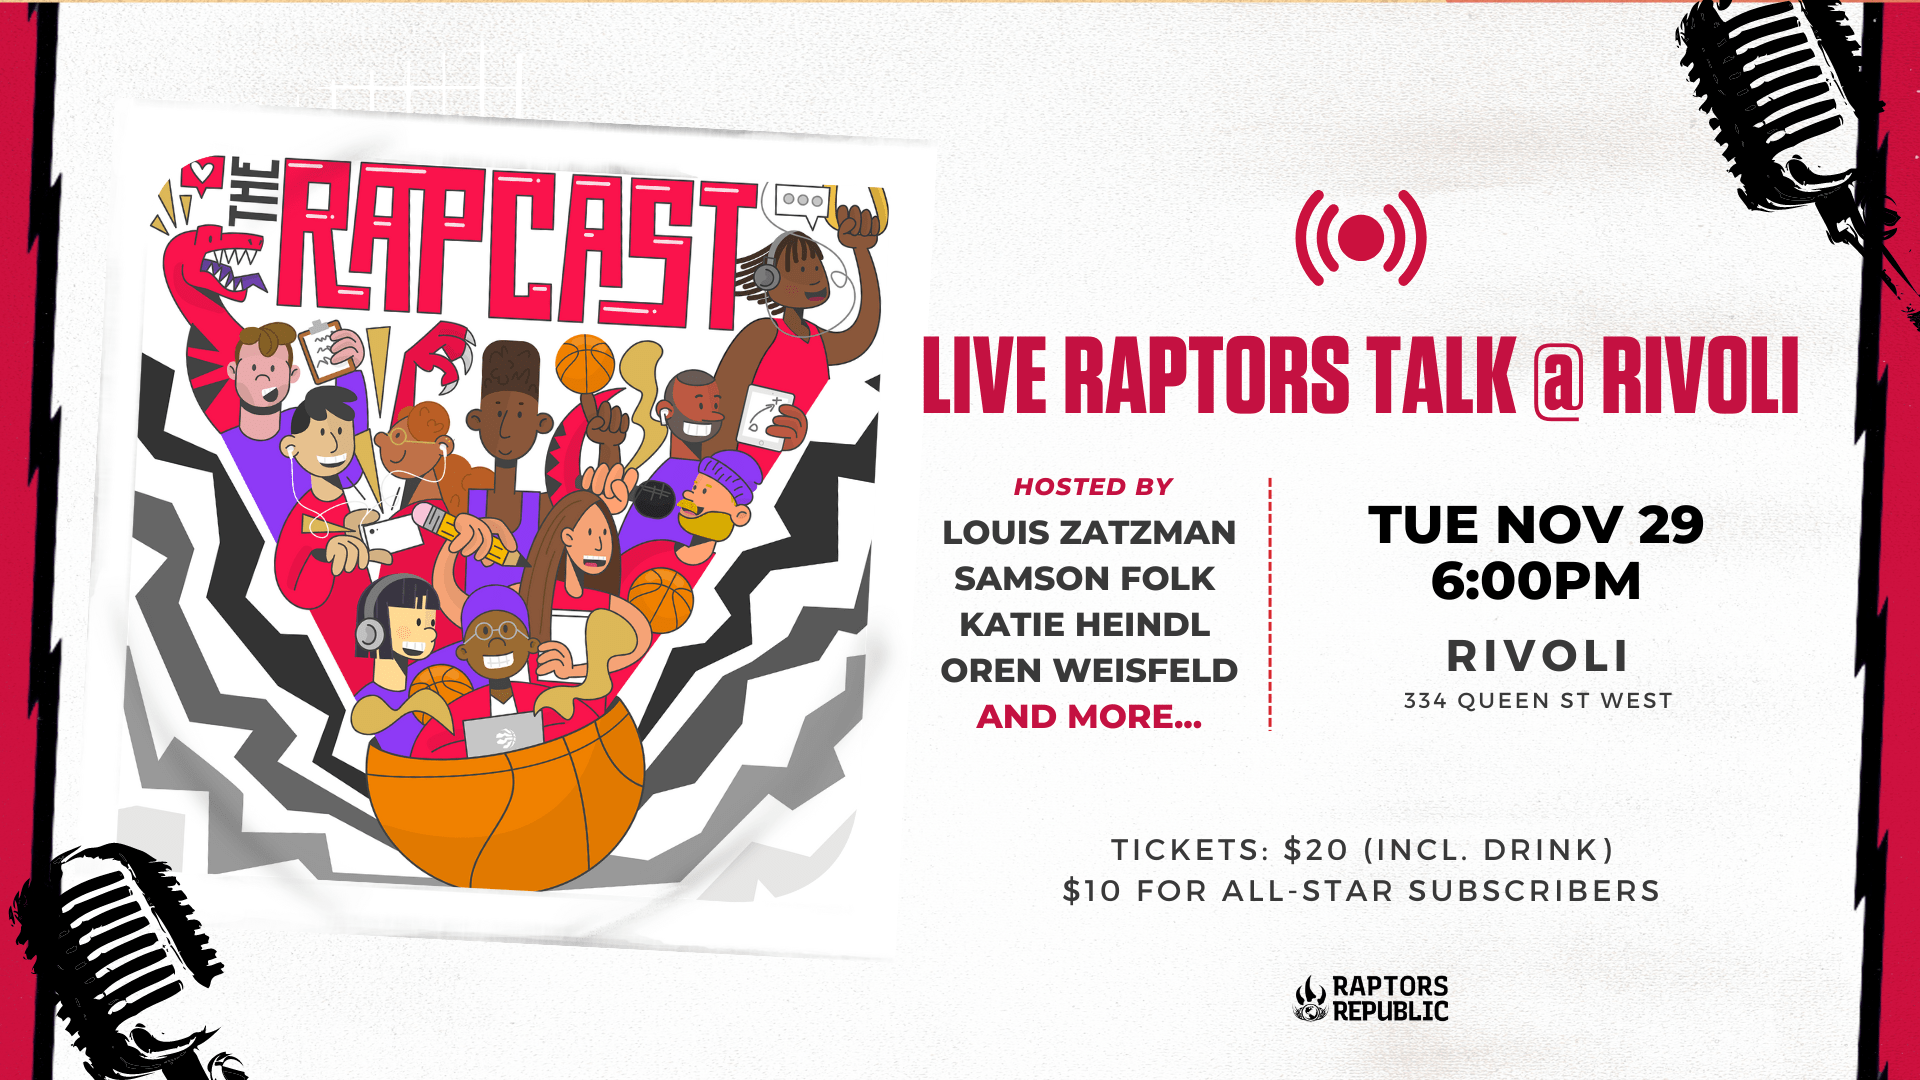 Live Raptors Talk: Tuesday, Nov 29 @ Rivoli Toronto